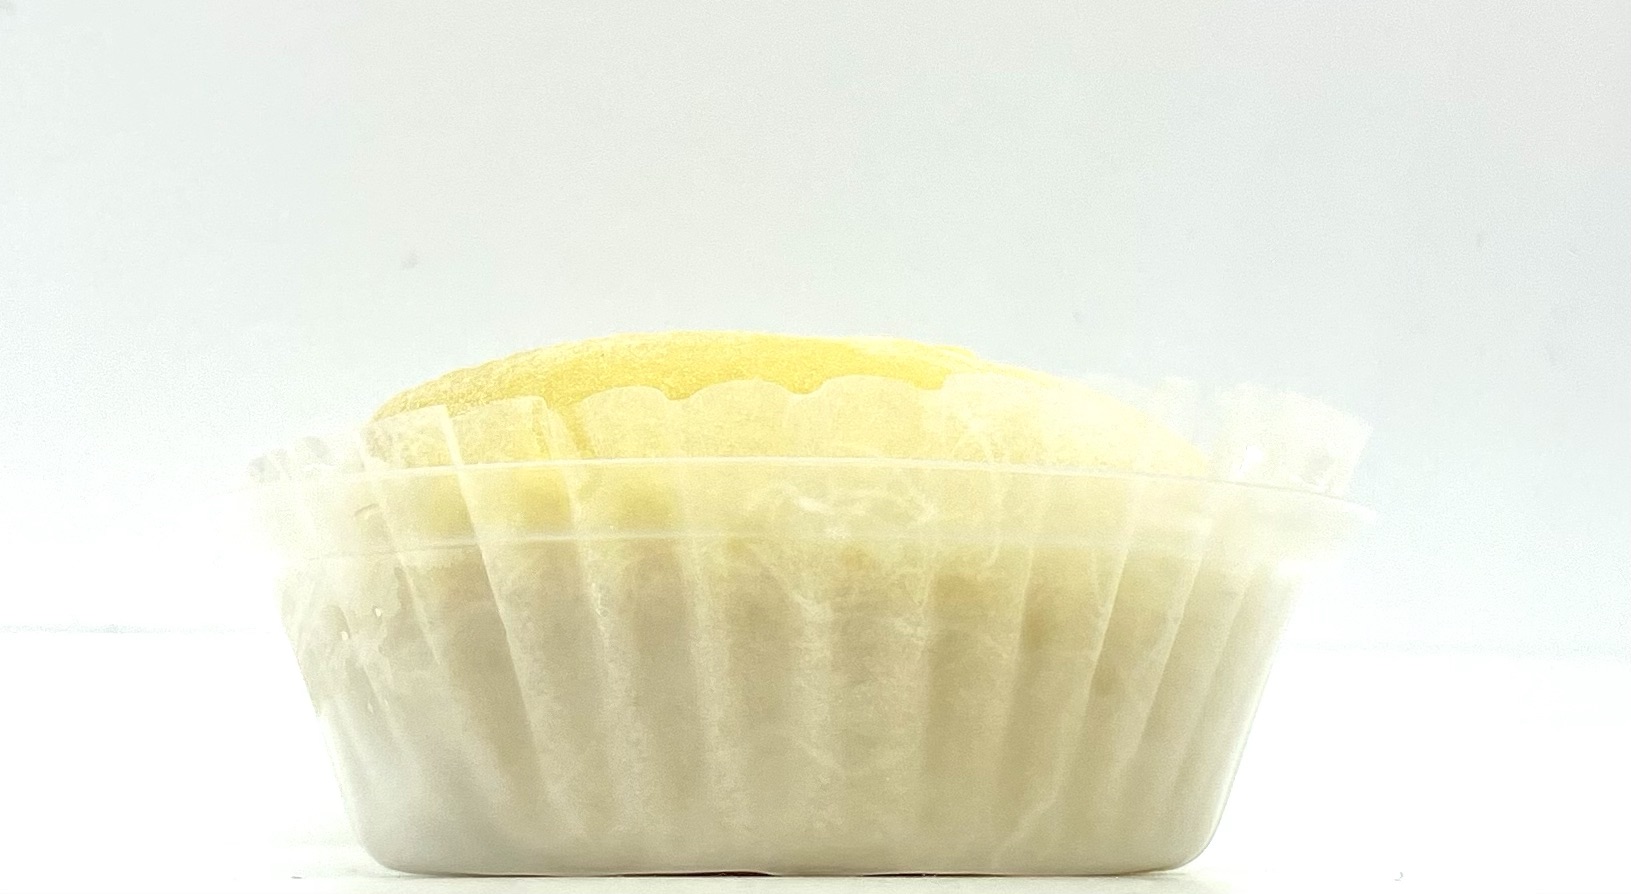 seveneleven-rice-cake-sweet-potato-cream-side